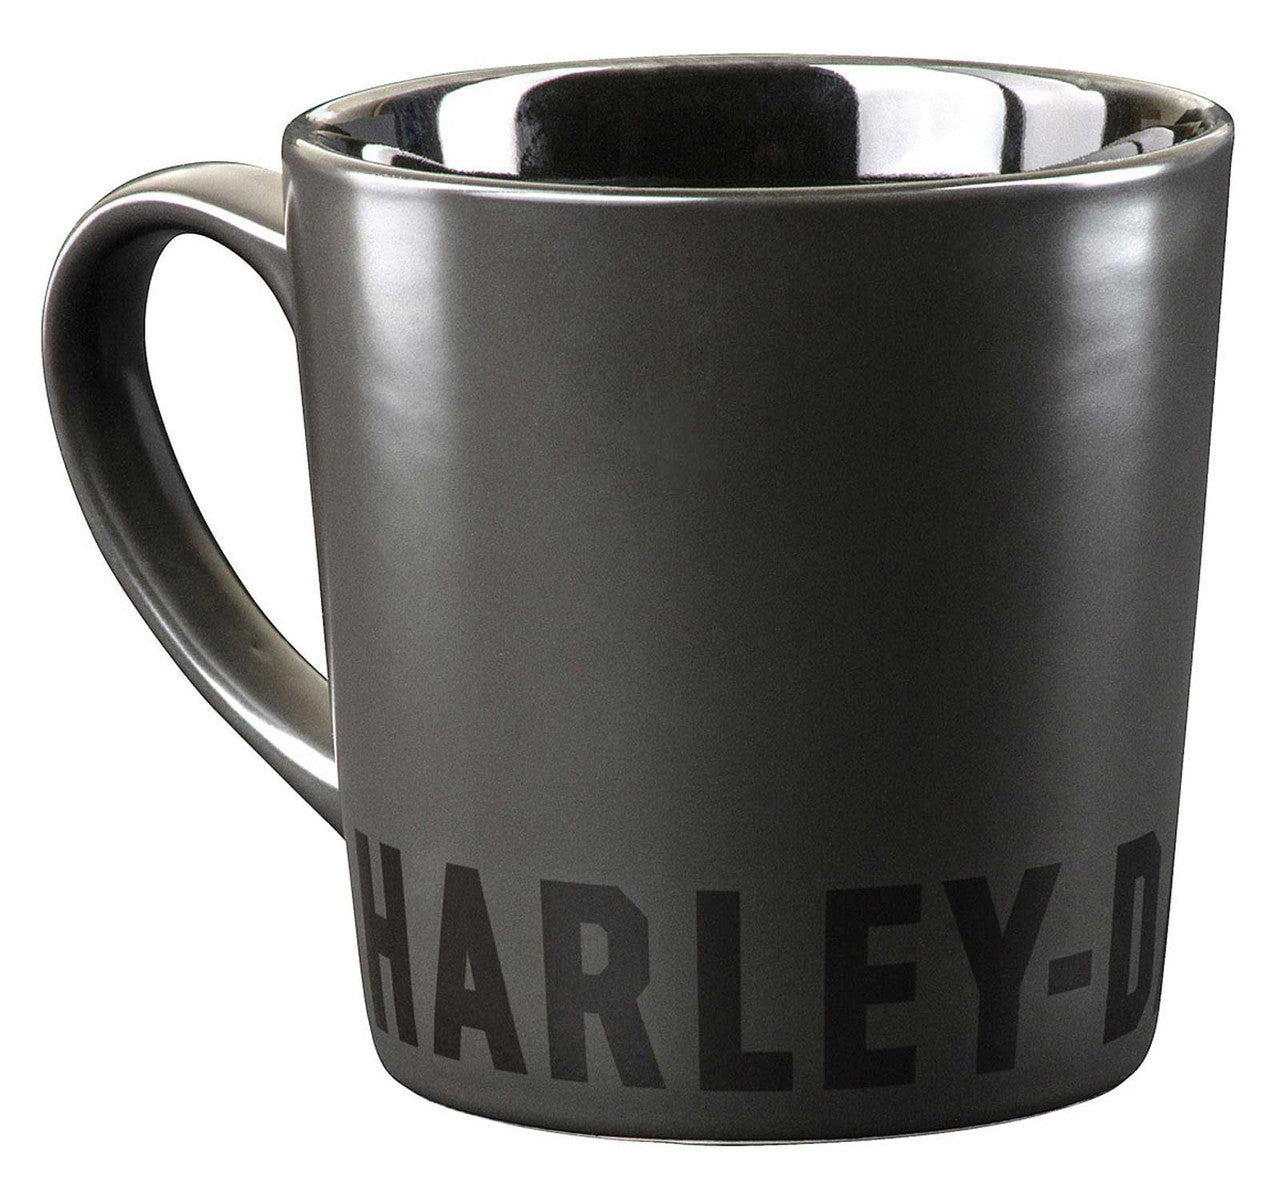 Harley-Davidson® Bold H-D Text Ceramic Coffee Mug - Matte Black - 16 oz.